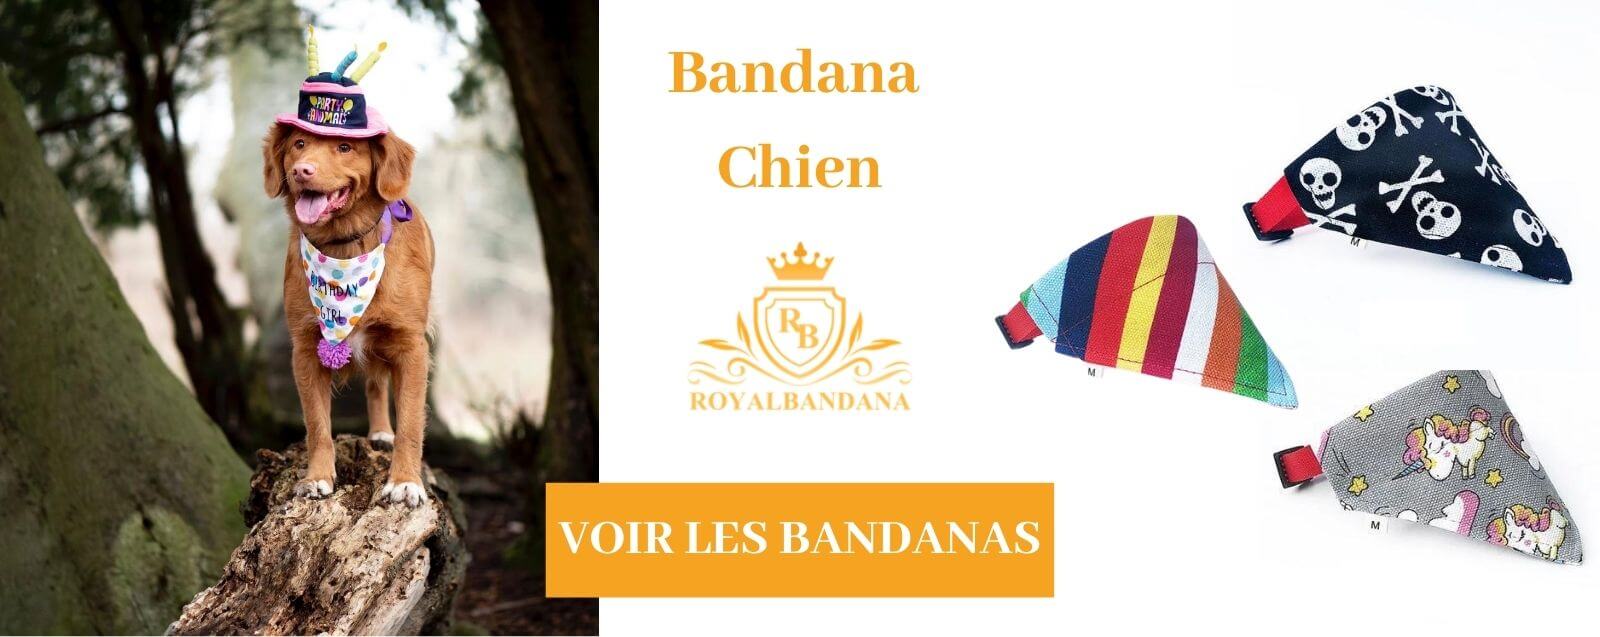 voir Collection bandana chien royalbandana